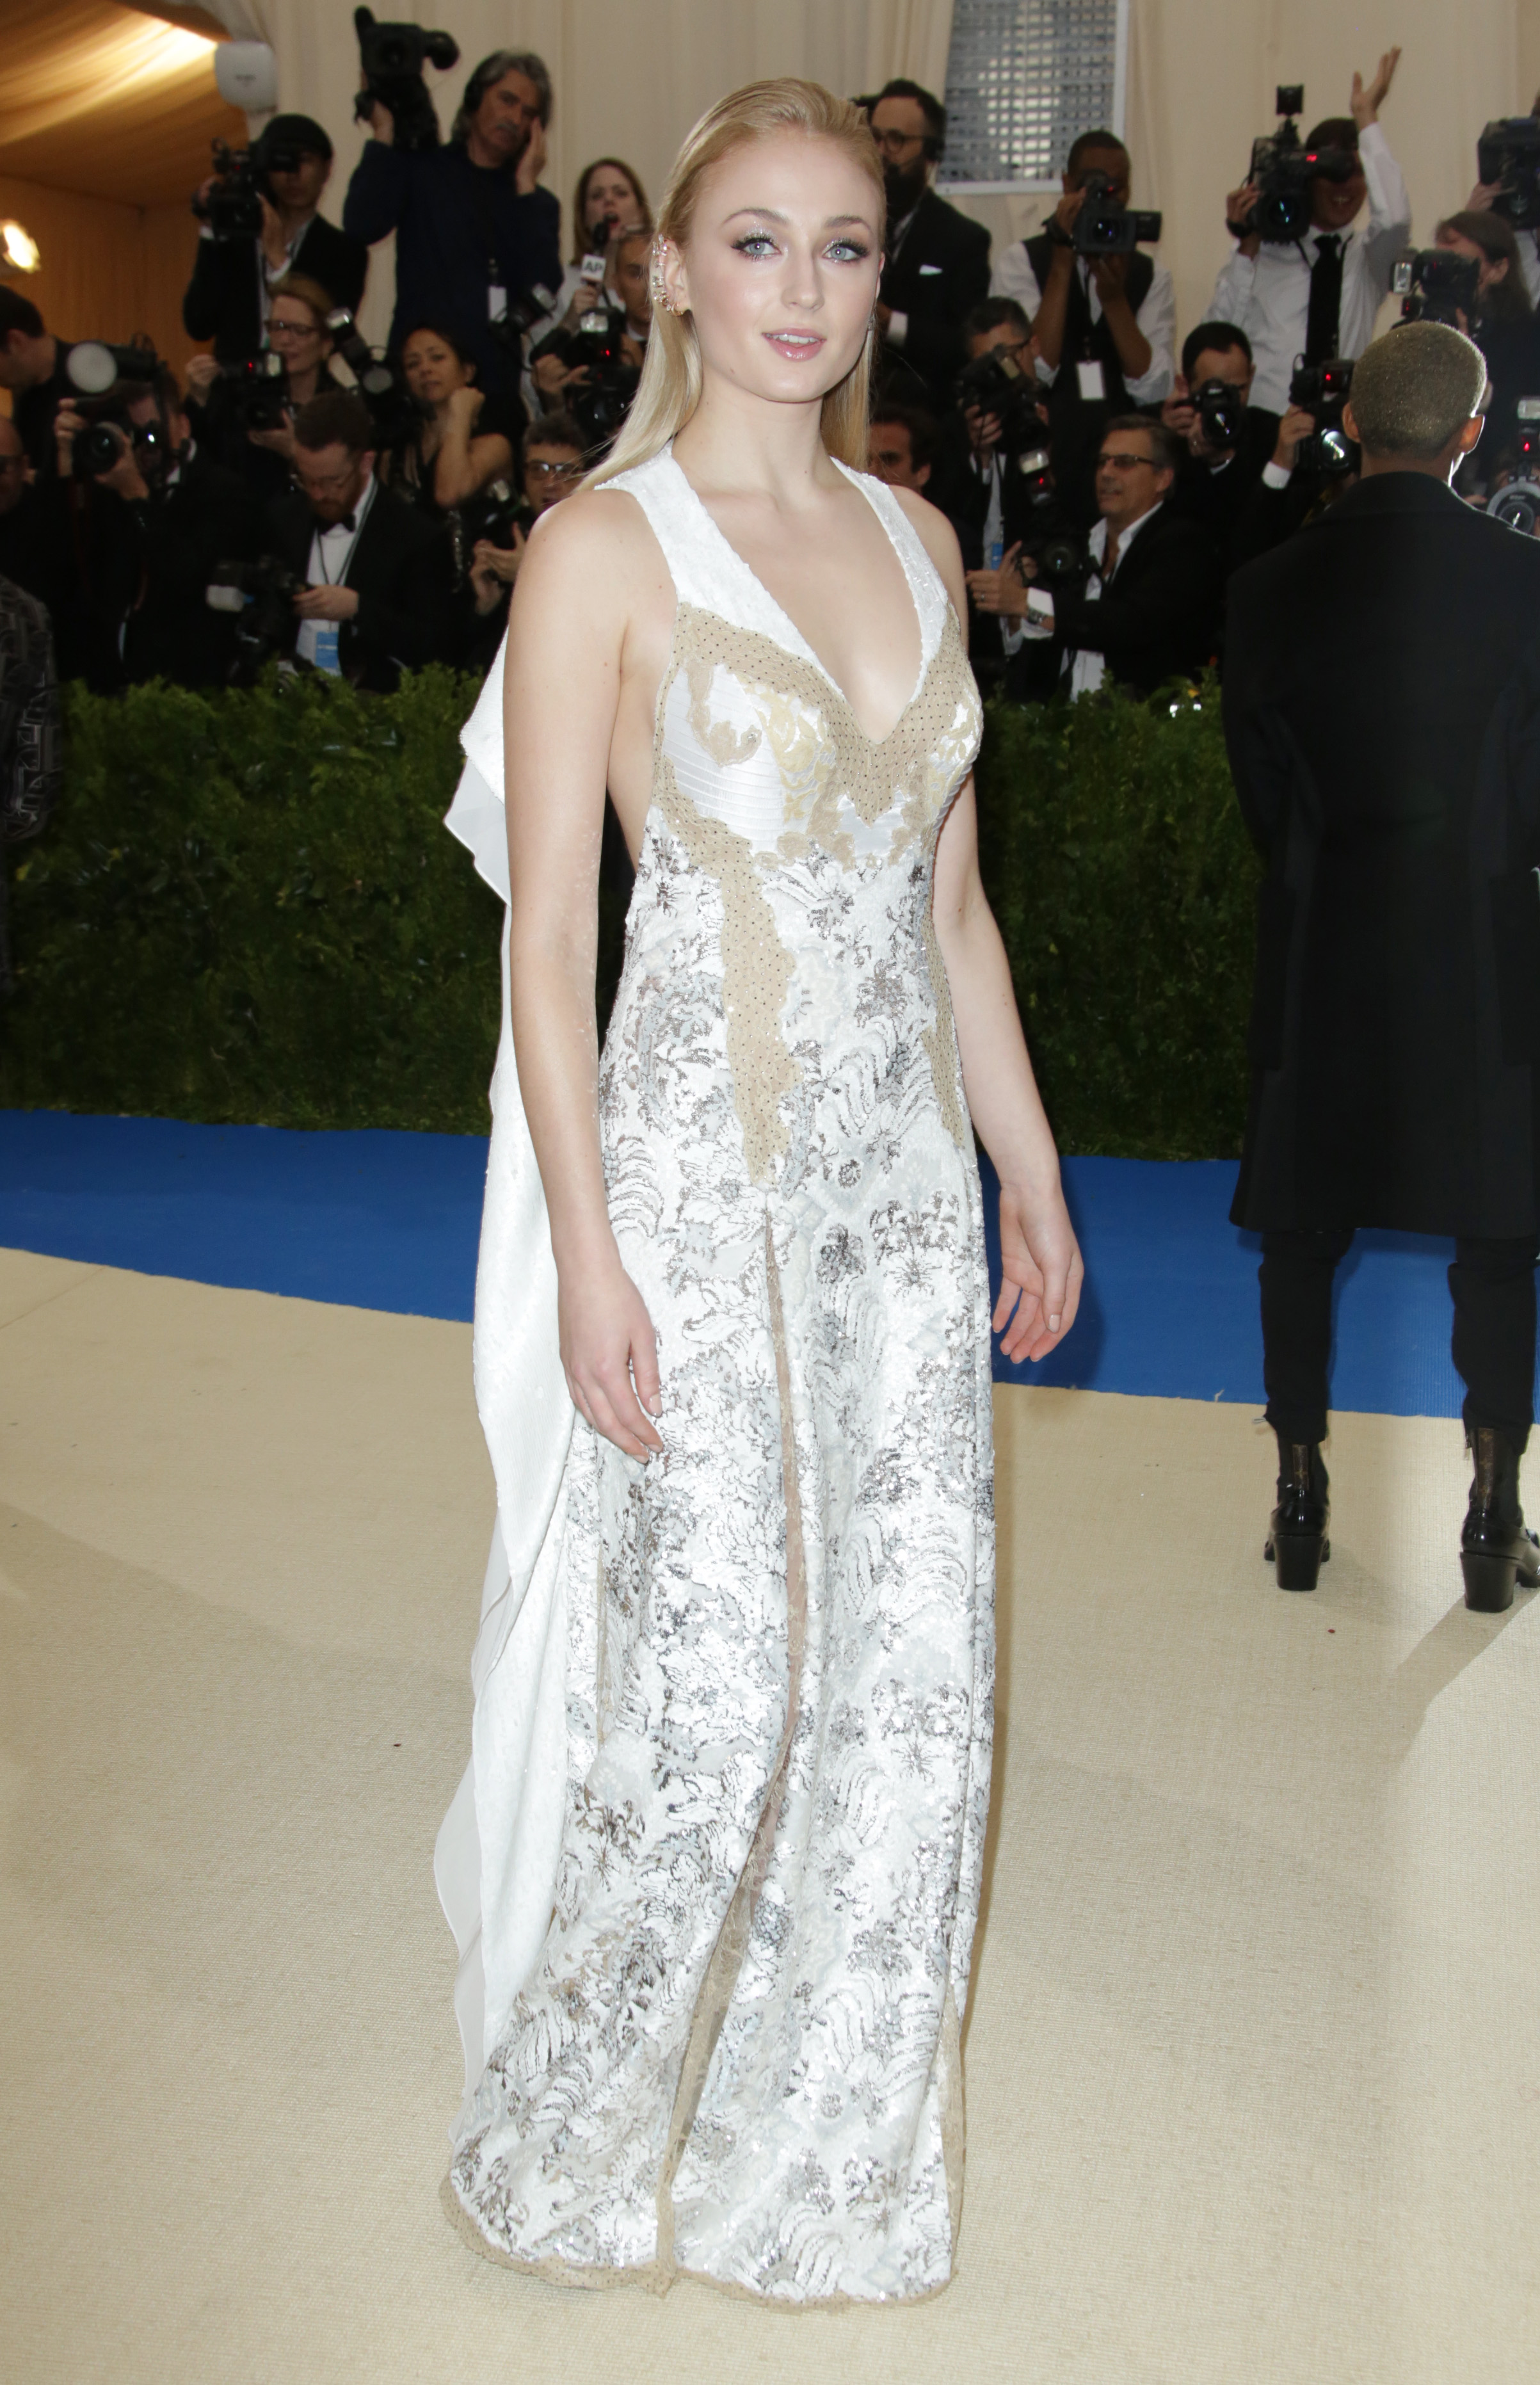 Sophie Turner's Louis Vuitton Dress at the Met Gala 2017